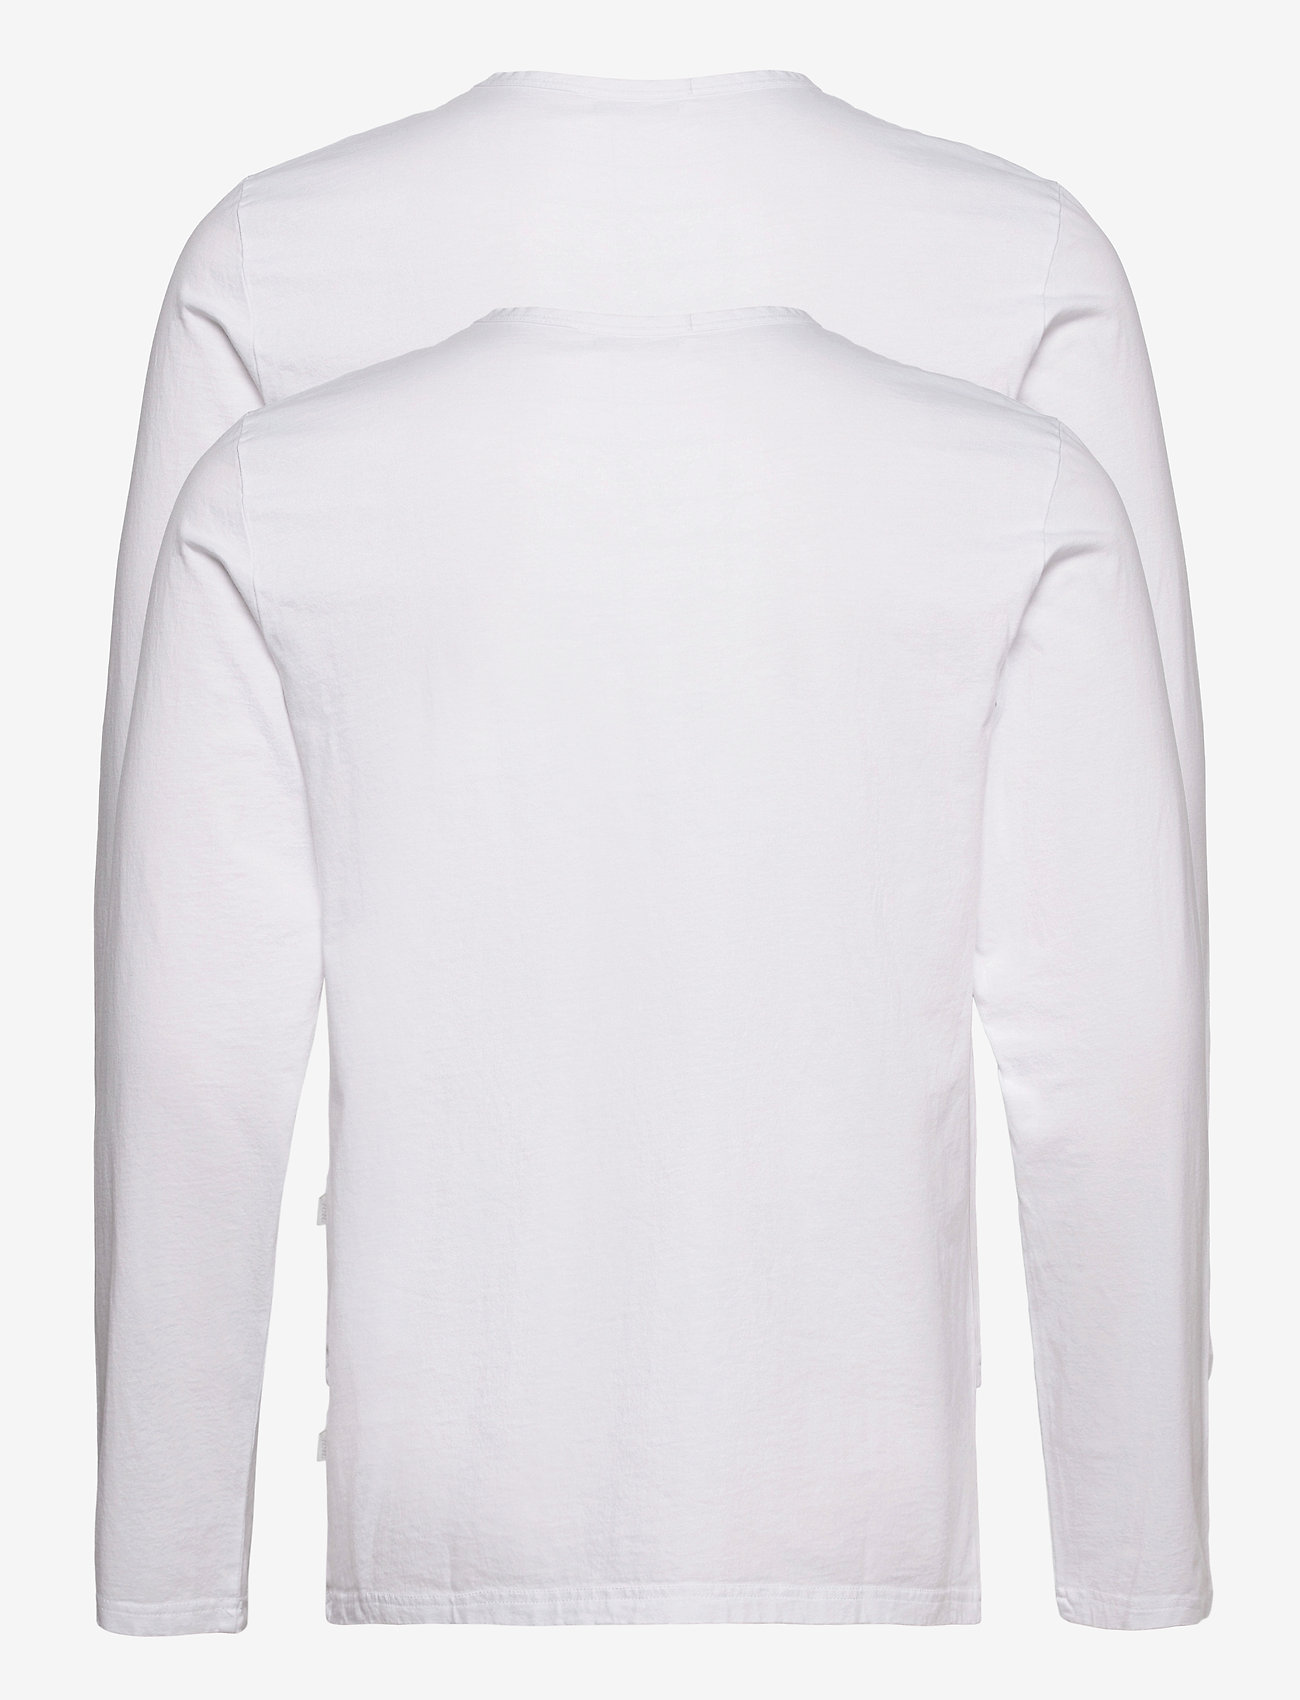 Wood Wood - Emil 2-pack long sleeve - långärmade t-shirts - bright white - 1